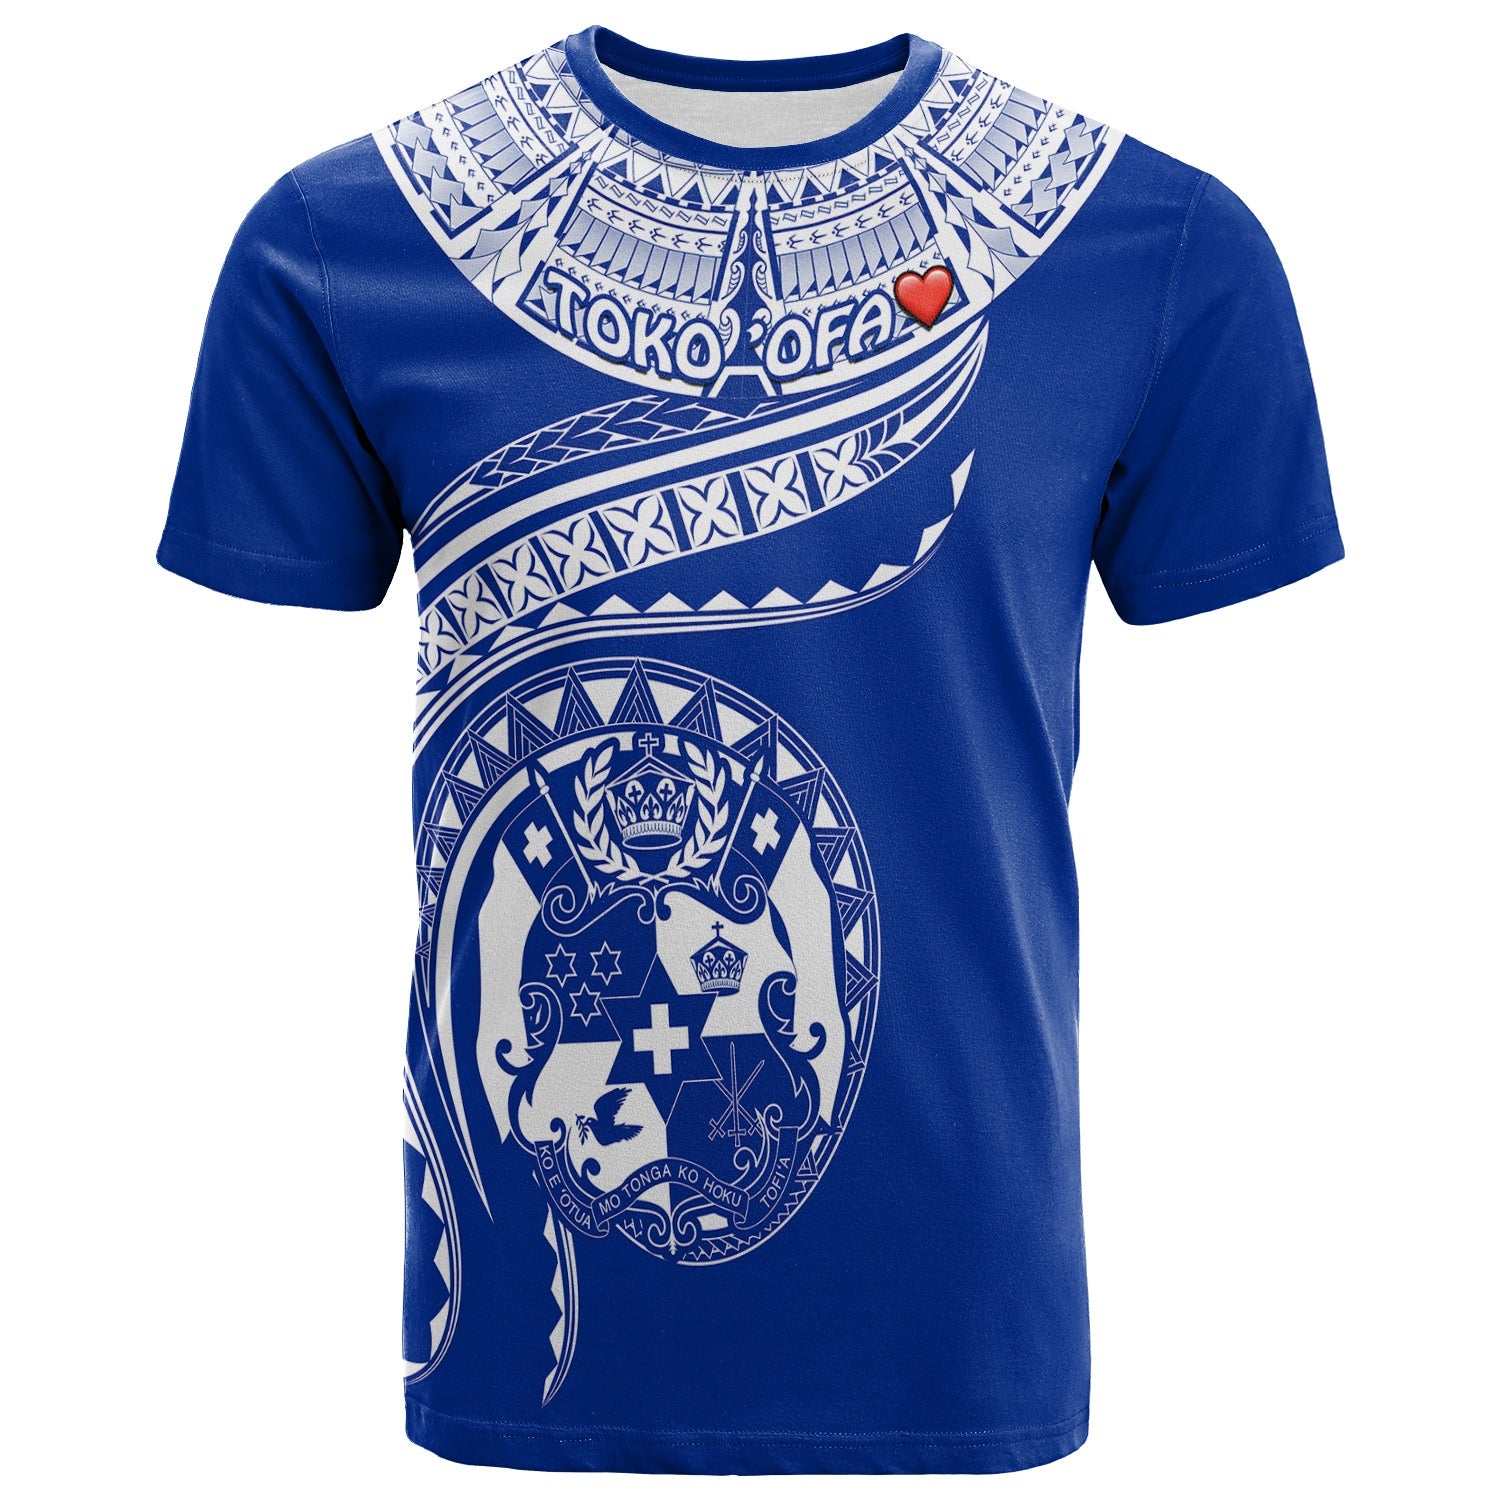 Custom (TOKO ofA) Tonga Polynesian T Shirt Tonga Waves Blue 02 LT13 Unisex Blue - Polynesian Pride